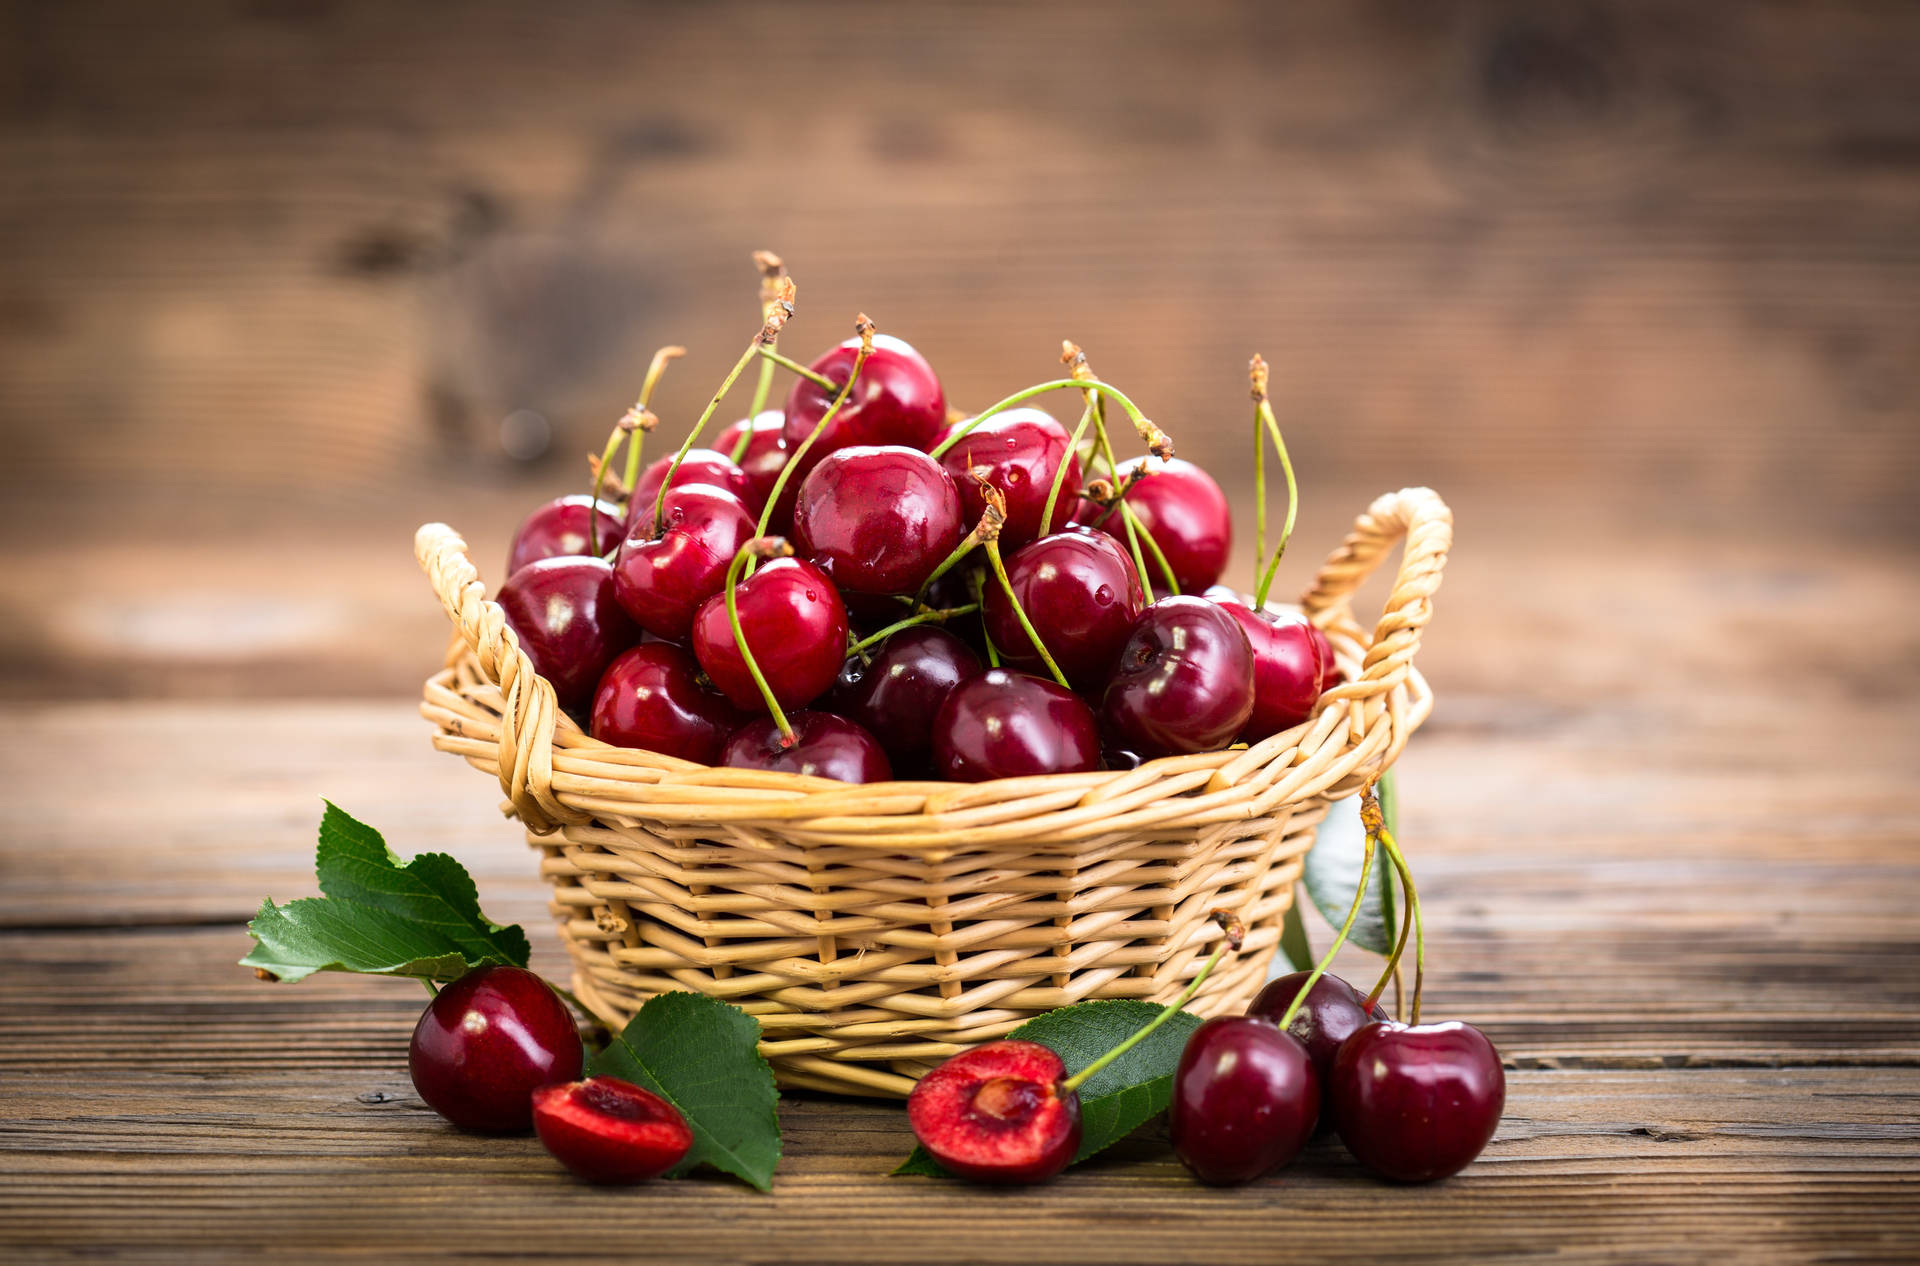 Cherries In Wicker Basket